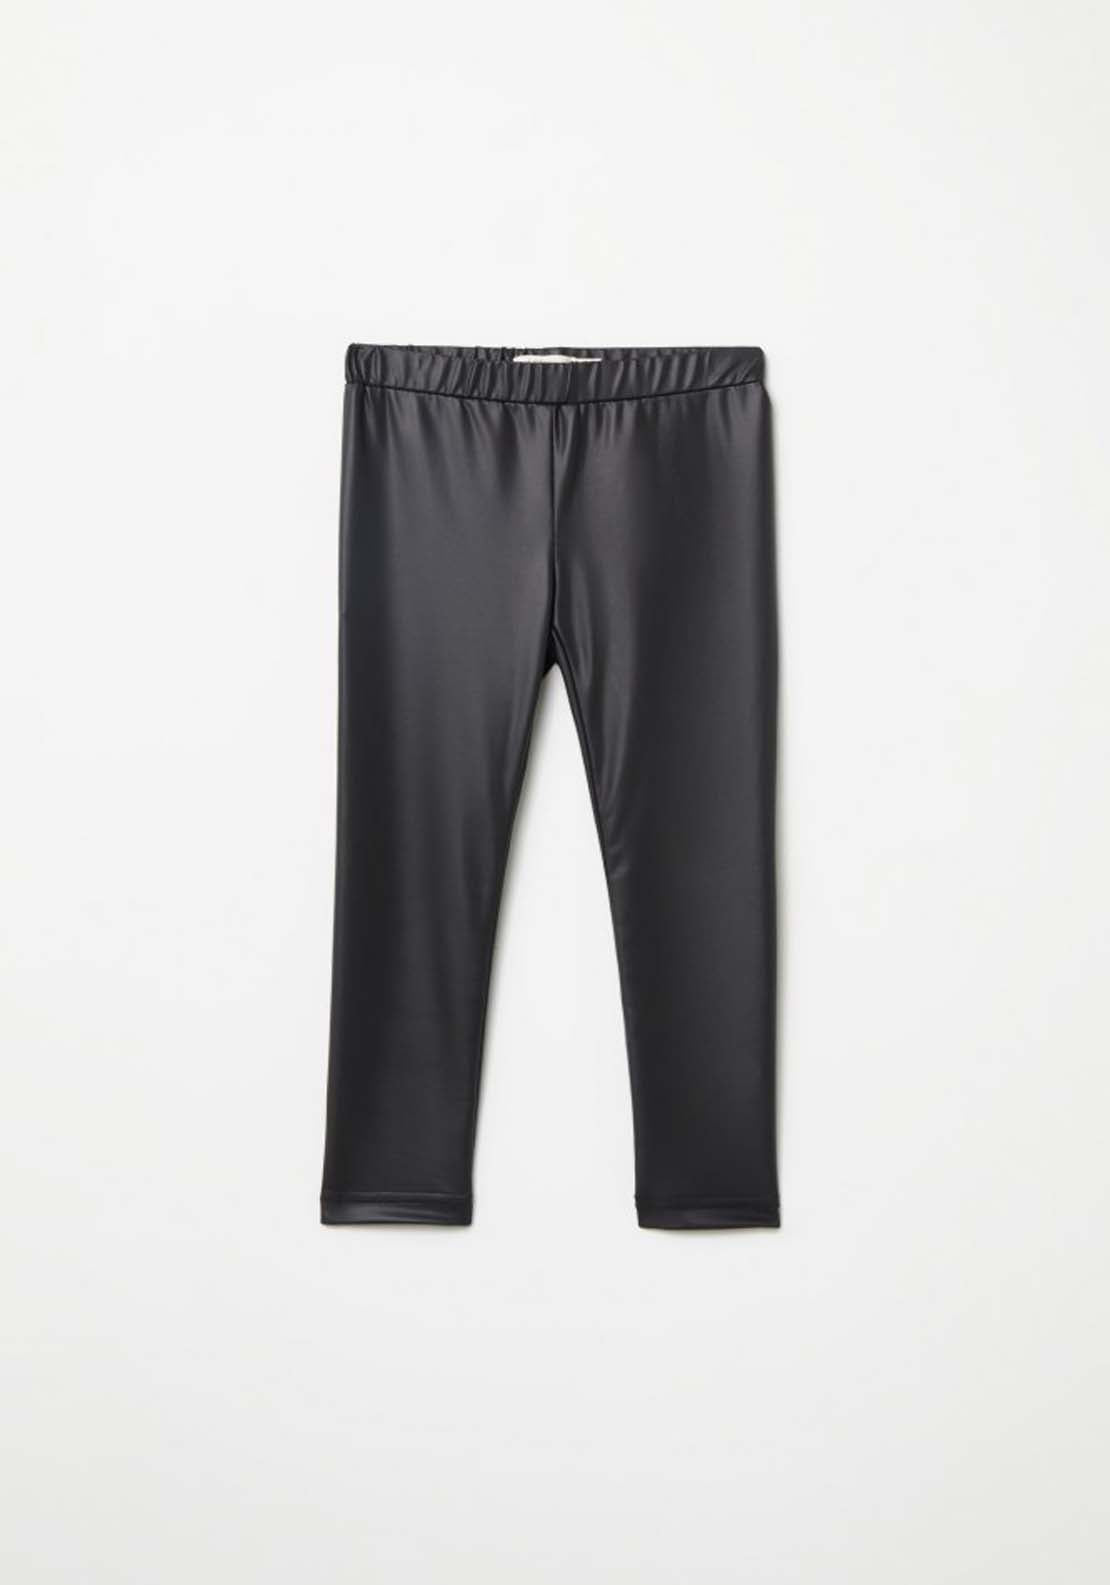 Sfera Leather Look Leggings - Black 2 Shaws Department Stores